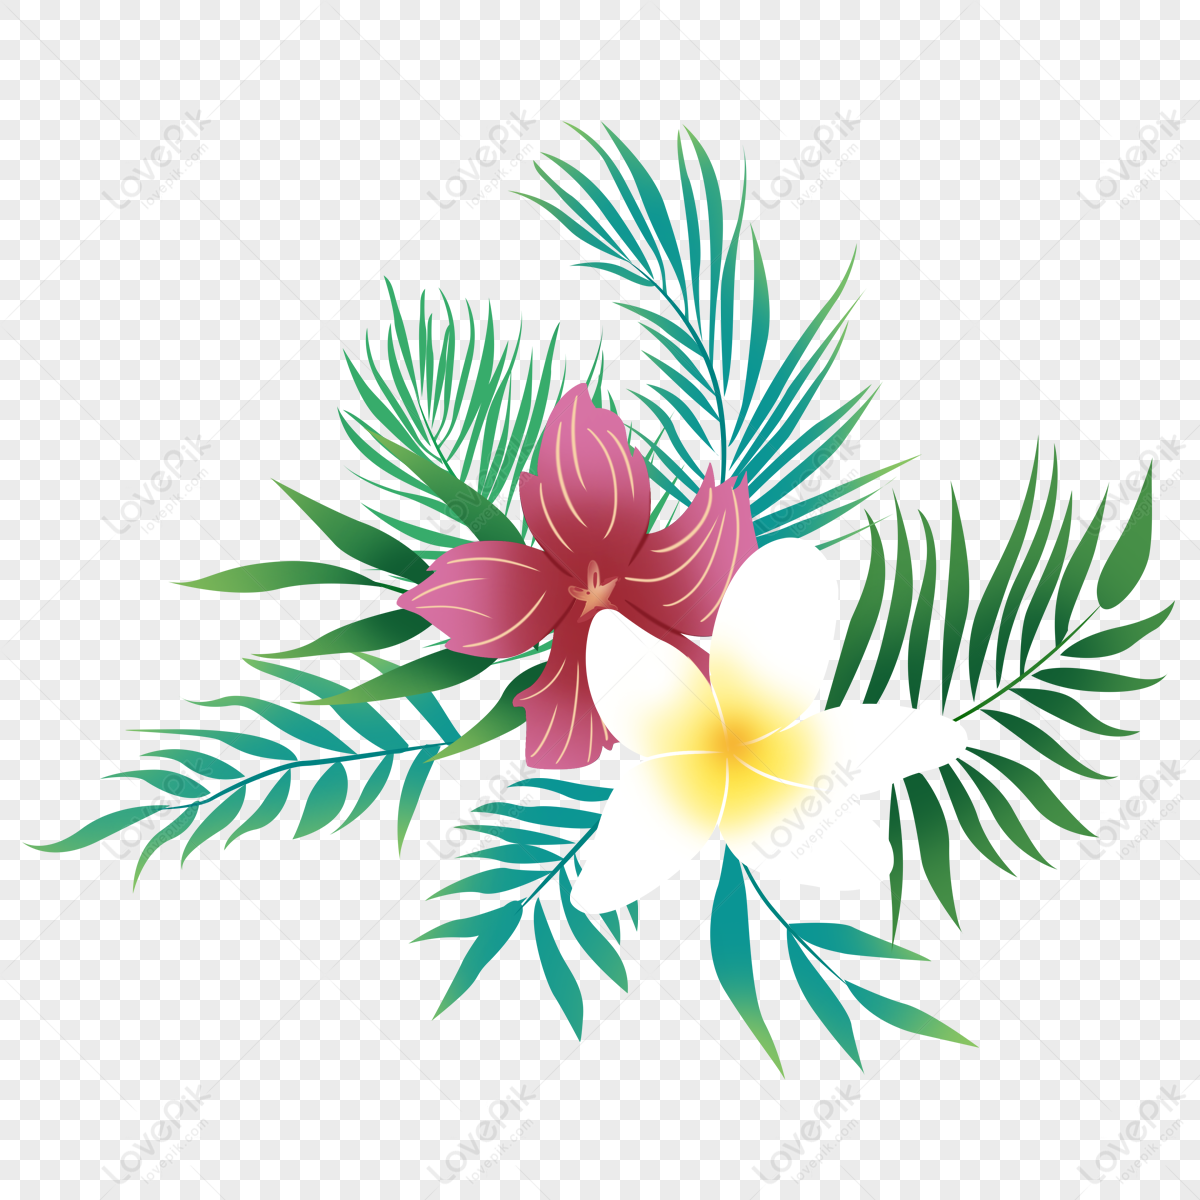 Flor Planta Tropical PNG Imagens Gratuitas Para Download - Lovepik